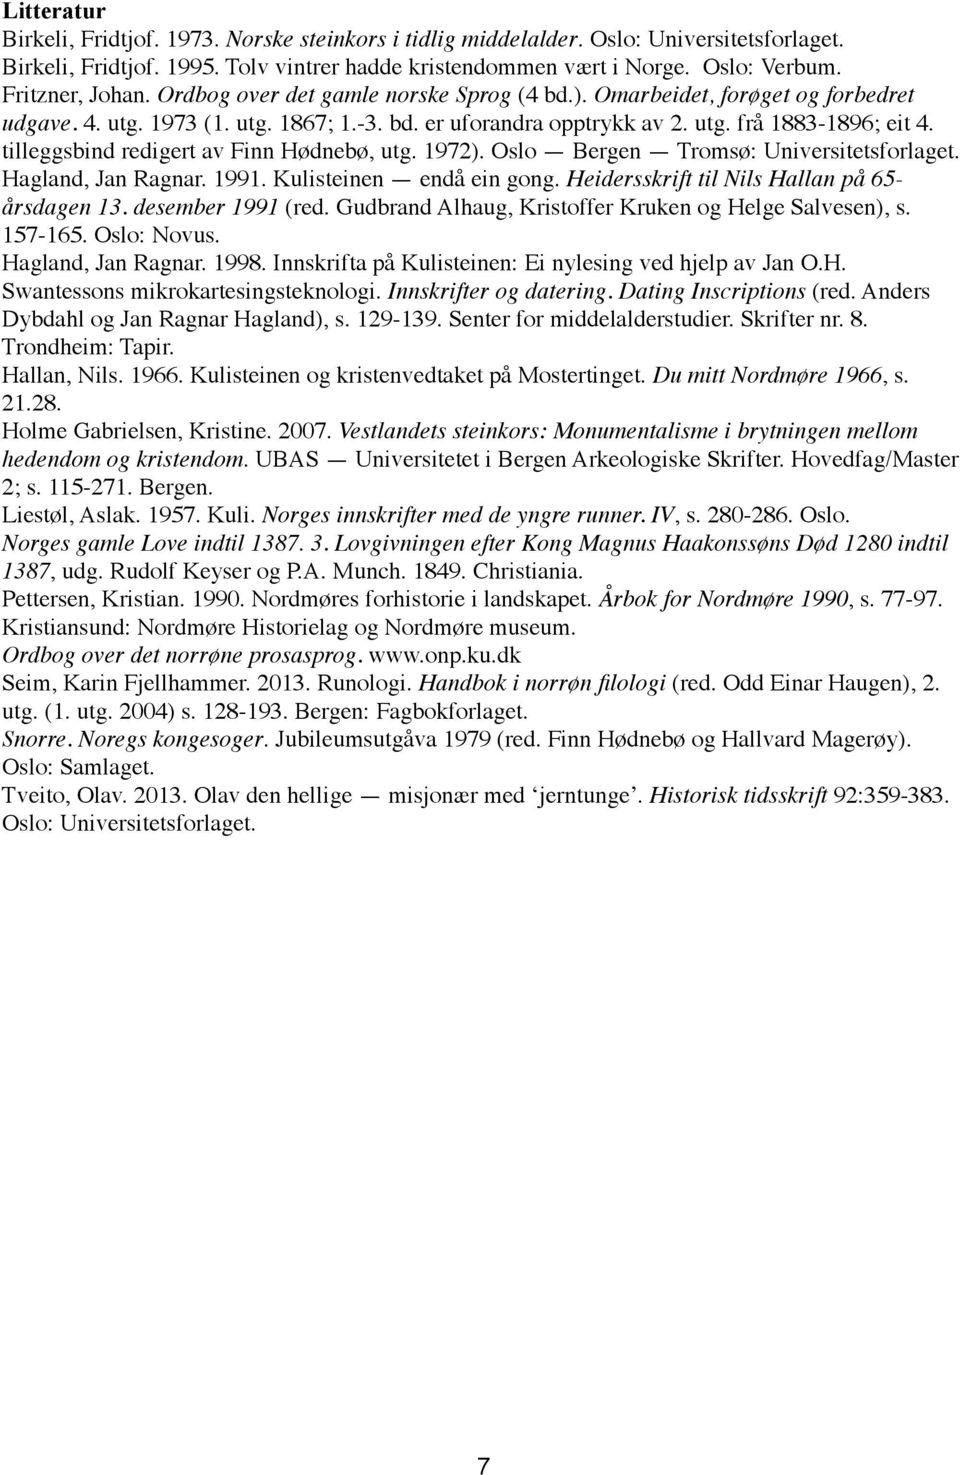 tilleggsbind redigert av Finn Hødnebø, utg. 1972). Oslo Bergen Tromsø: Universitetsforlaget. Hagland, Jan Ragnar. 1991. Kulisteinen endå ein gong. Heidersskrift til Nils Hallan på 65- årsdagen 13.